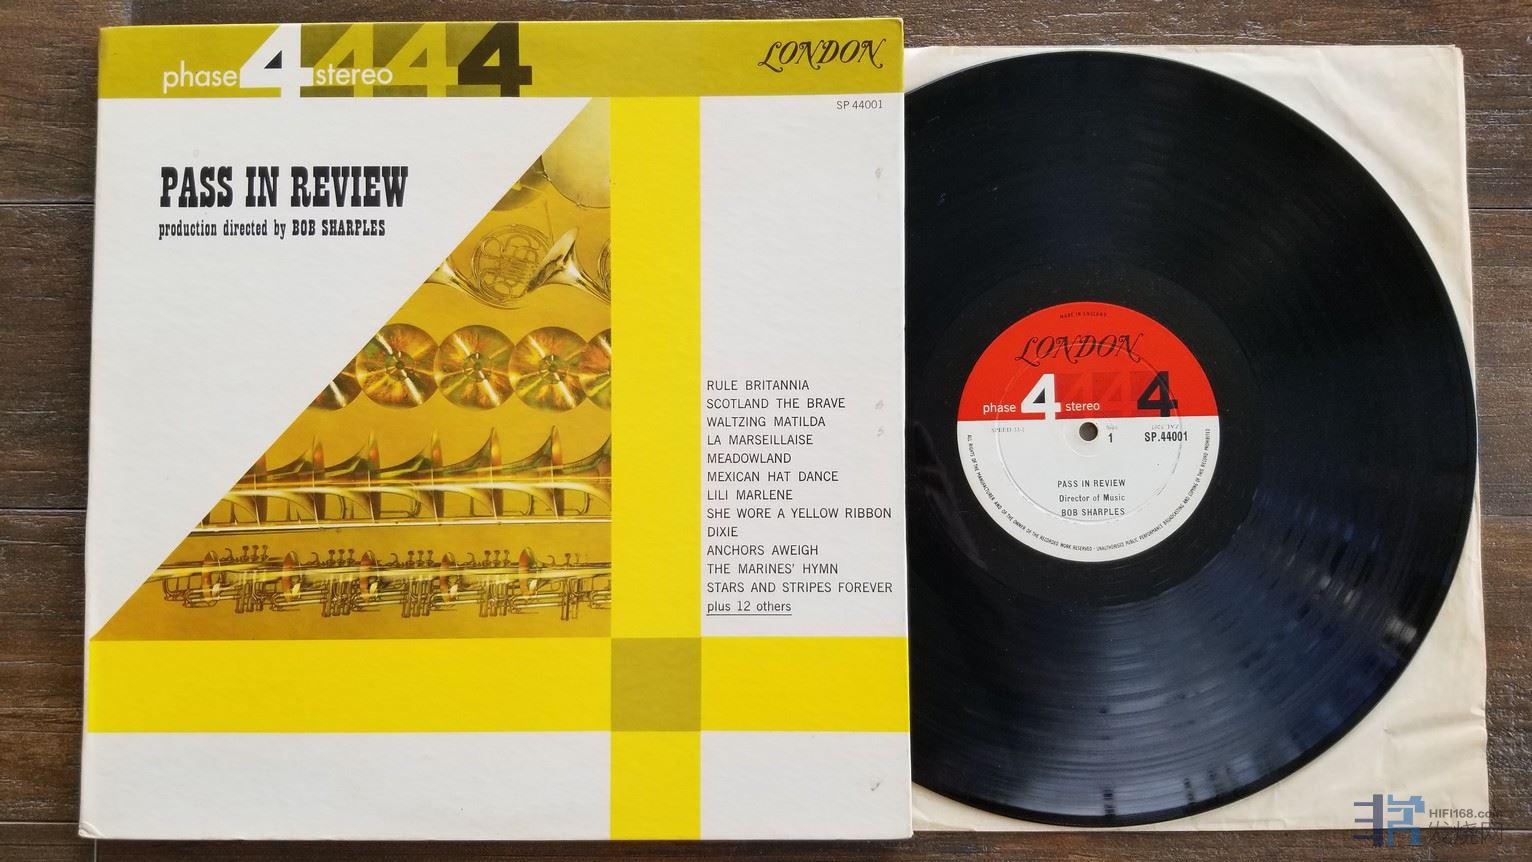 432 LP 10 Greatest Hits VA Vol.9 台湾盤 昨天再見 【送料込】 台湾盤